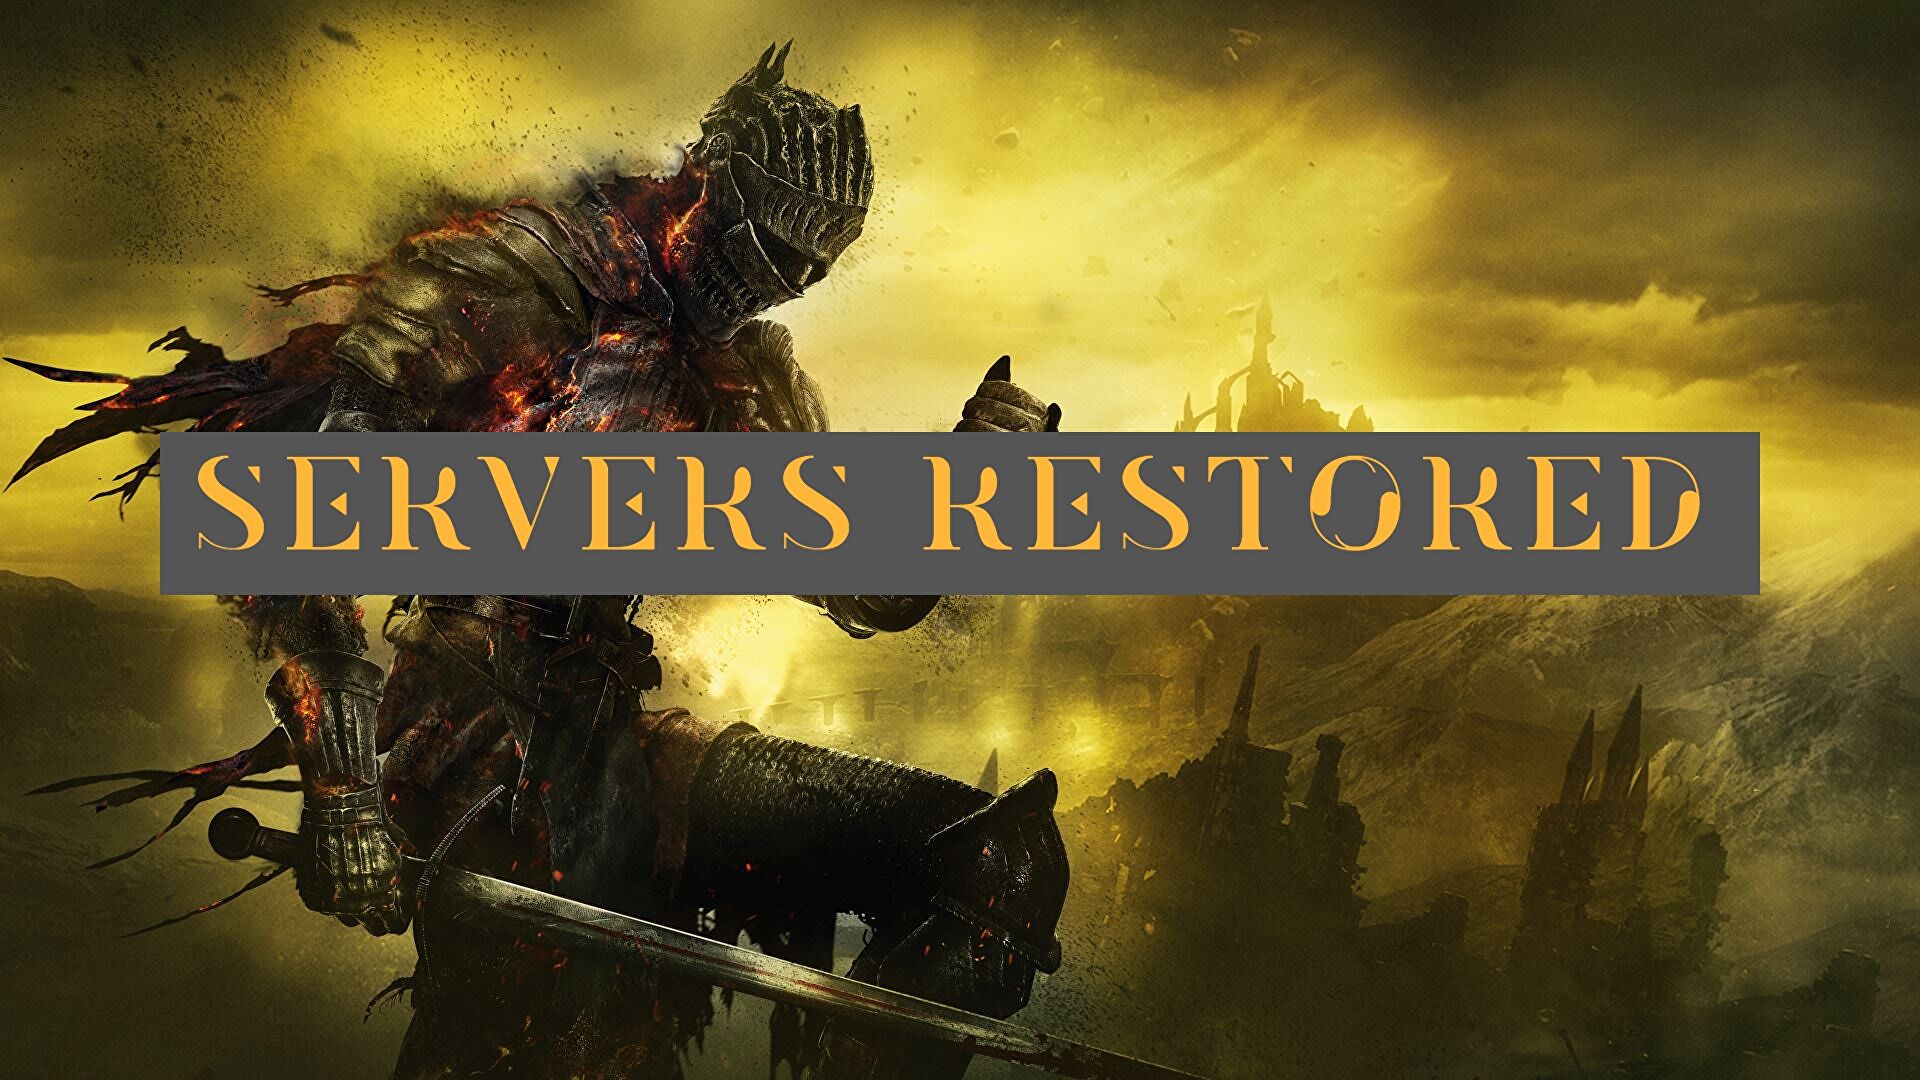 Dark Souls 3 Servers Restored